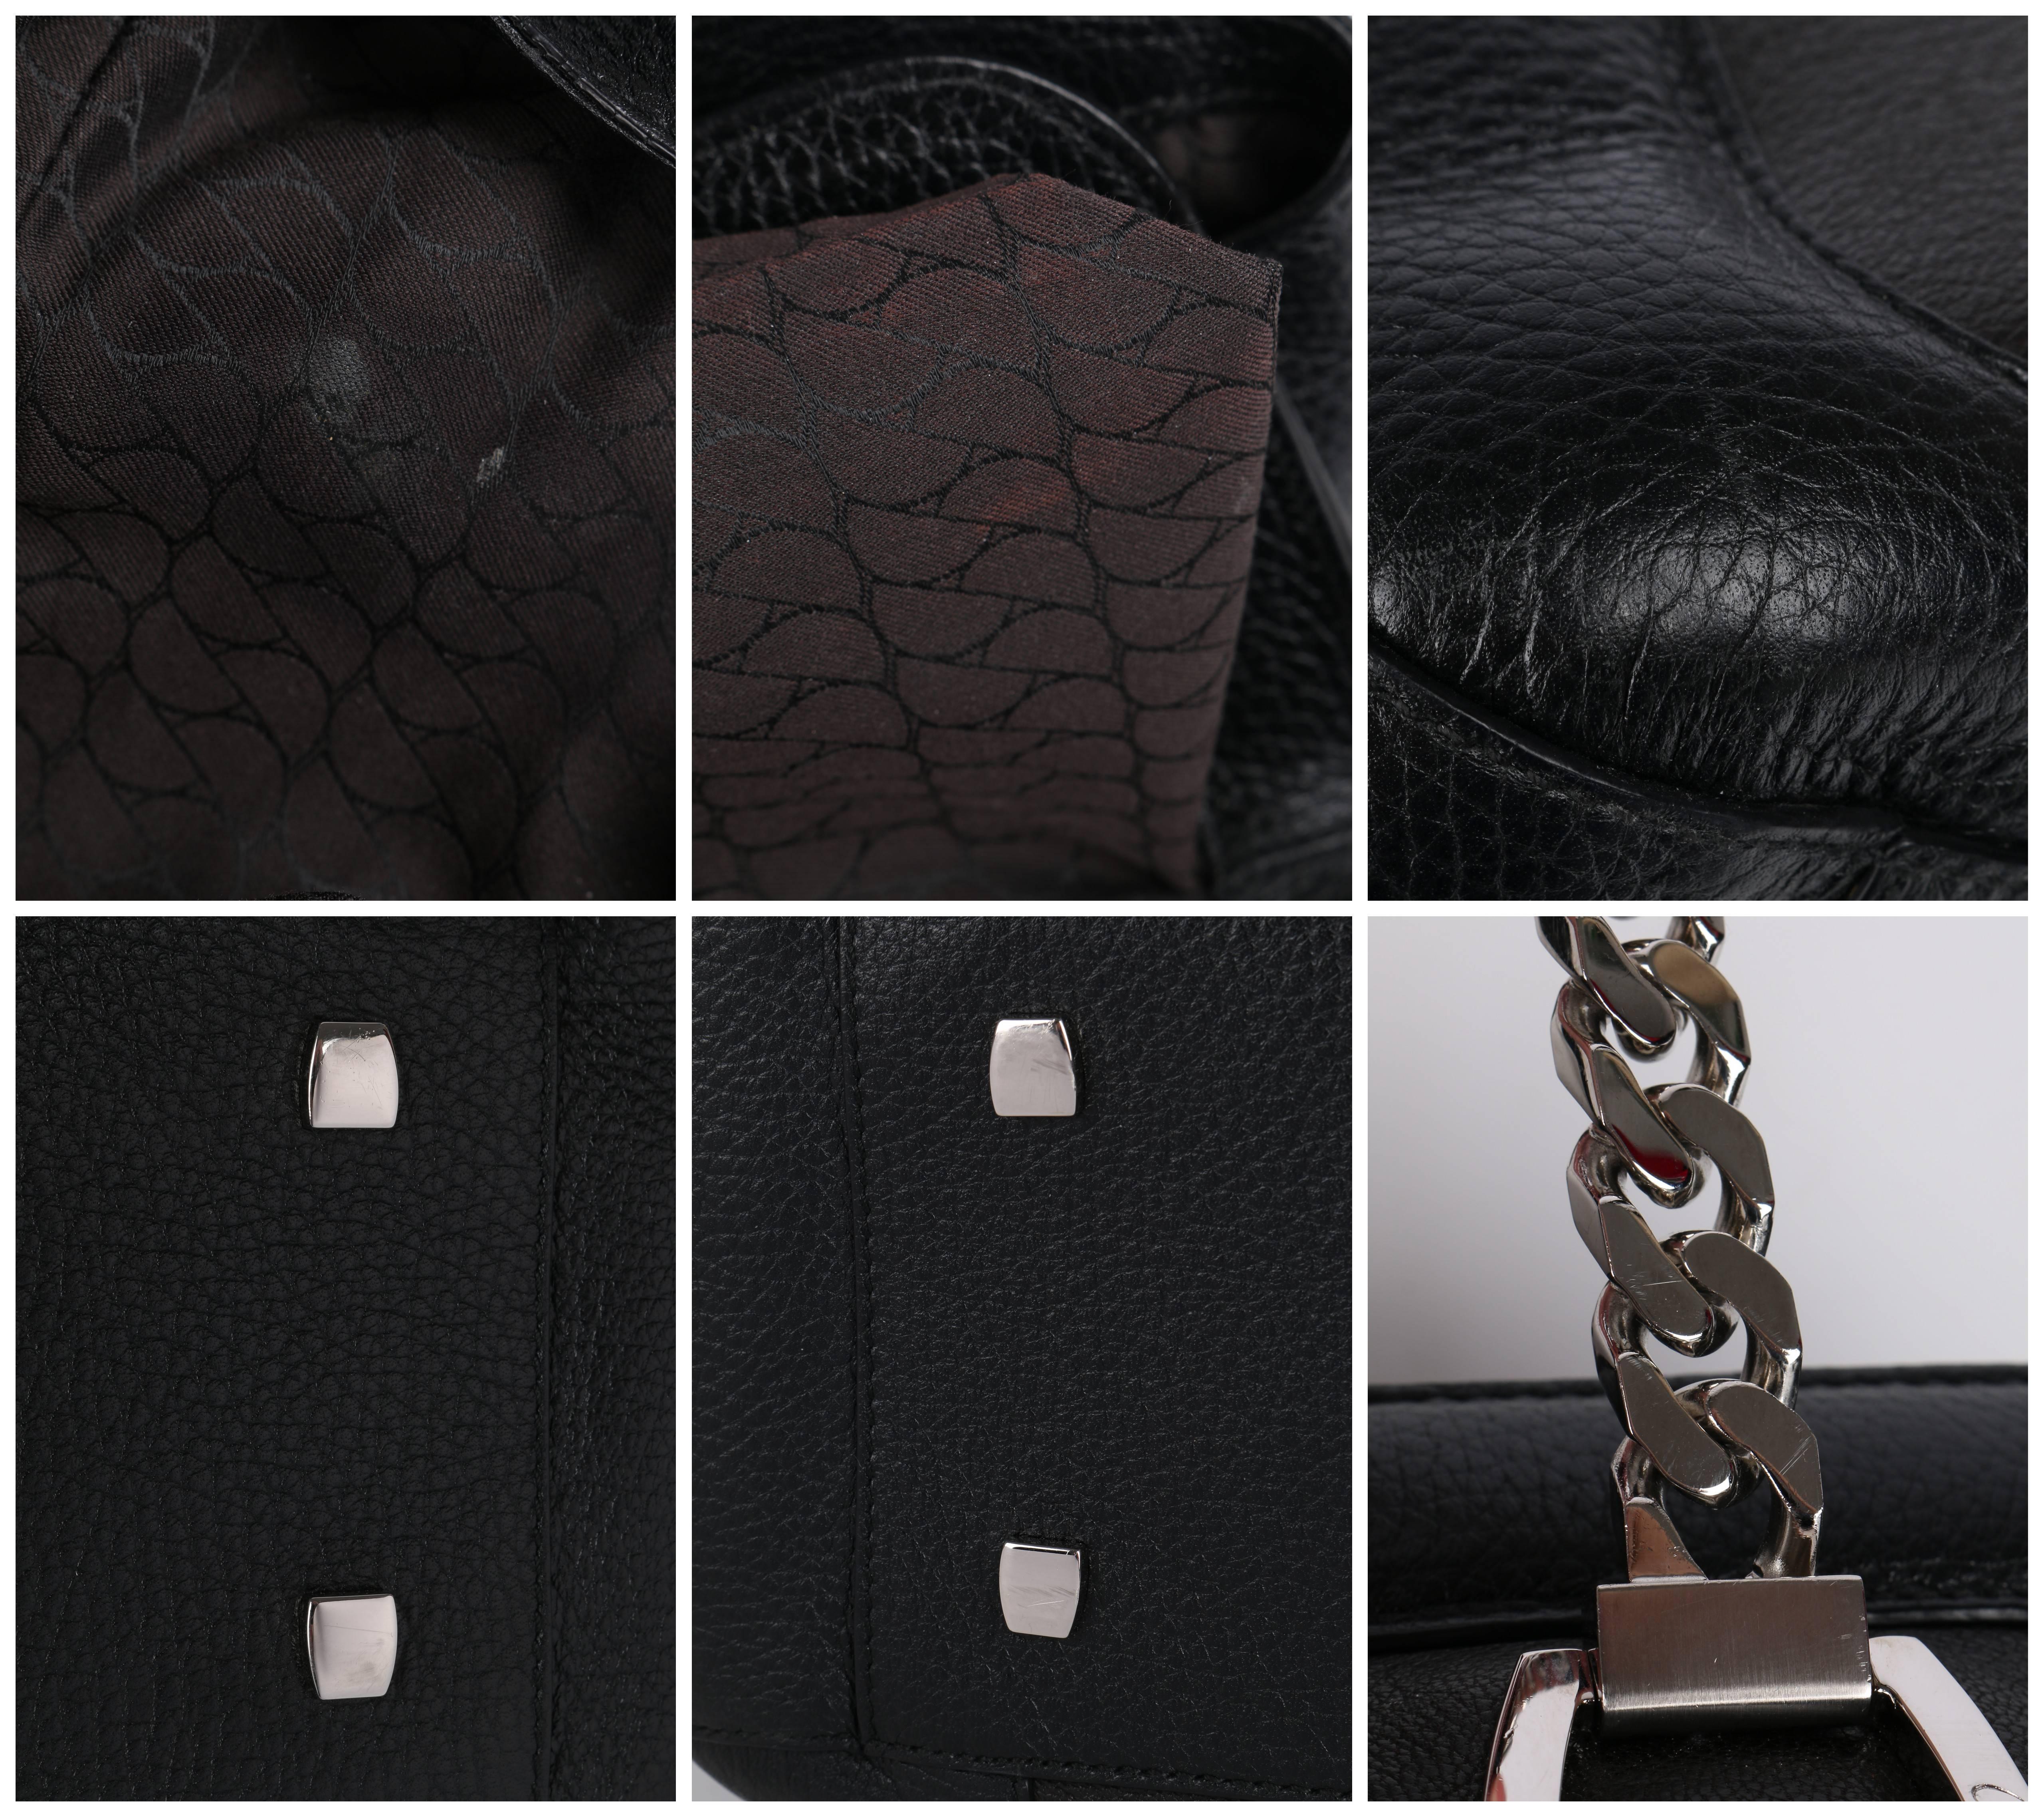 CARTIER Black Textured Leather La Dona Chain Link Satchel Bag Handbag Purse 6